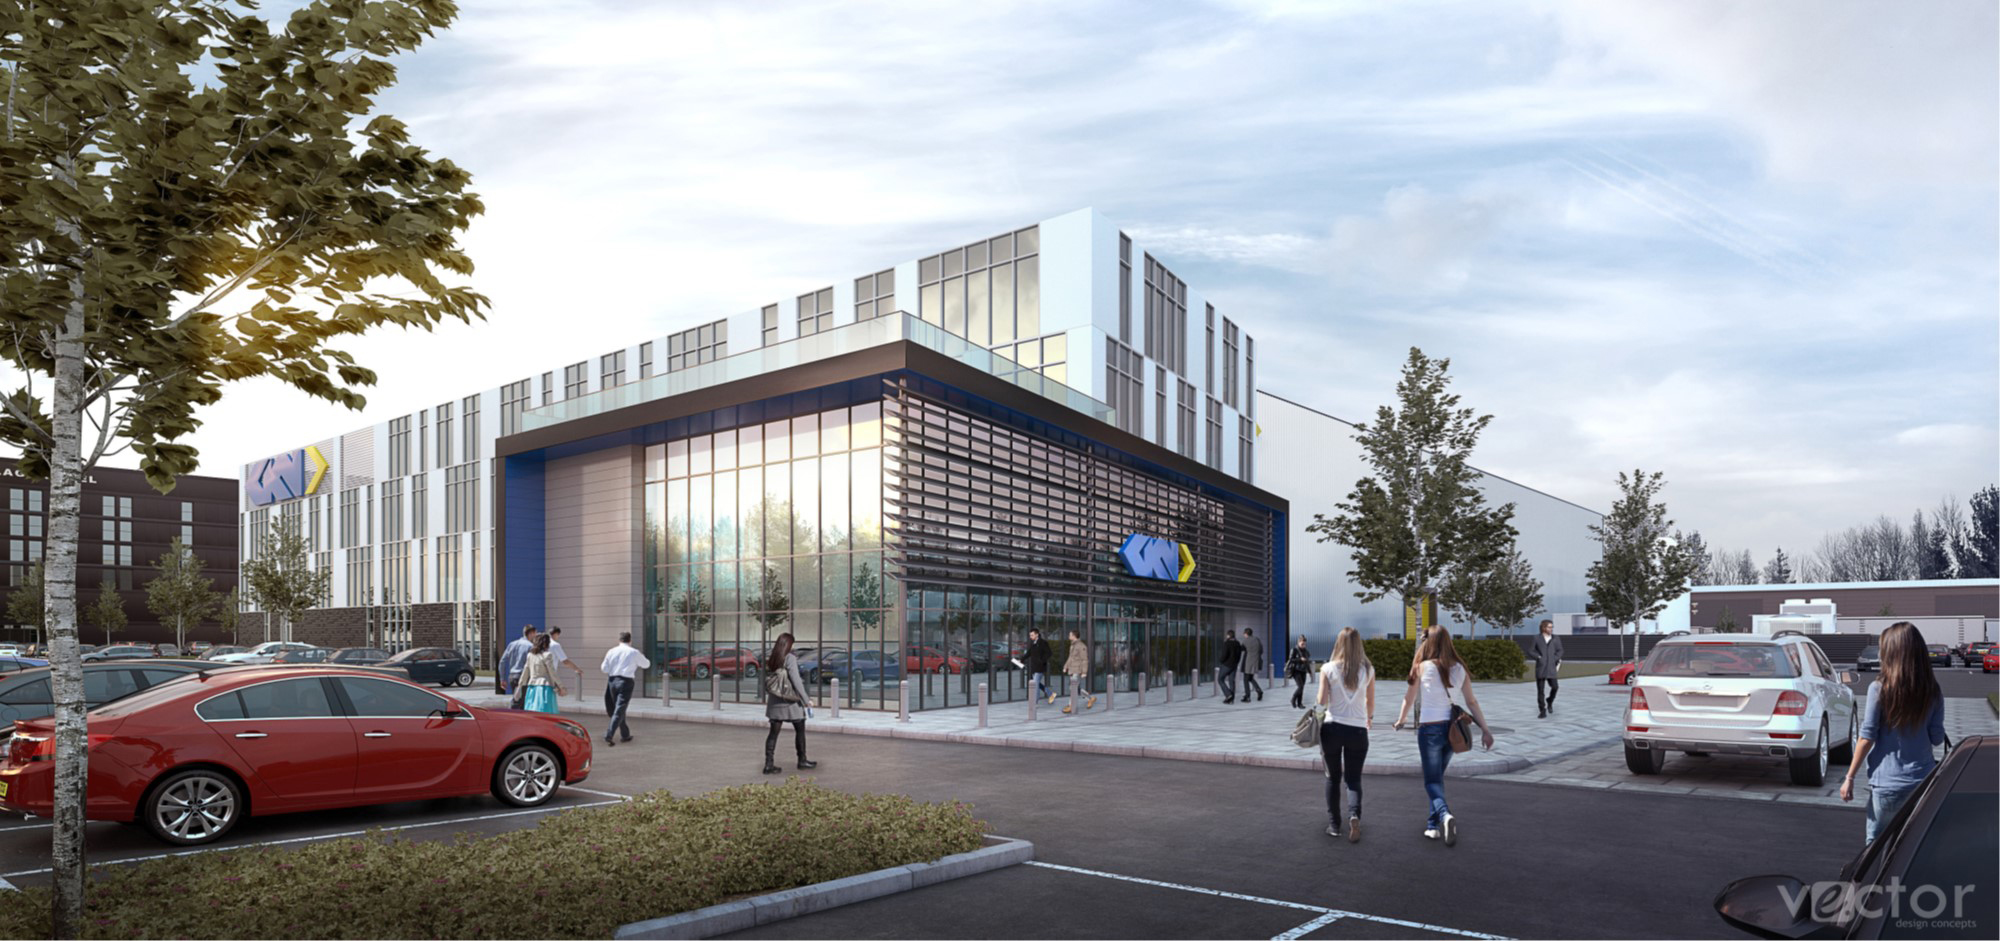 Digital render of the forthcoming Global Technology Center. Image via GKN Aerospace